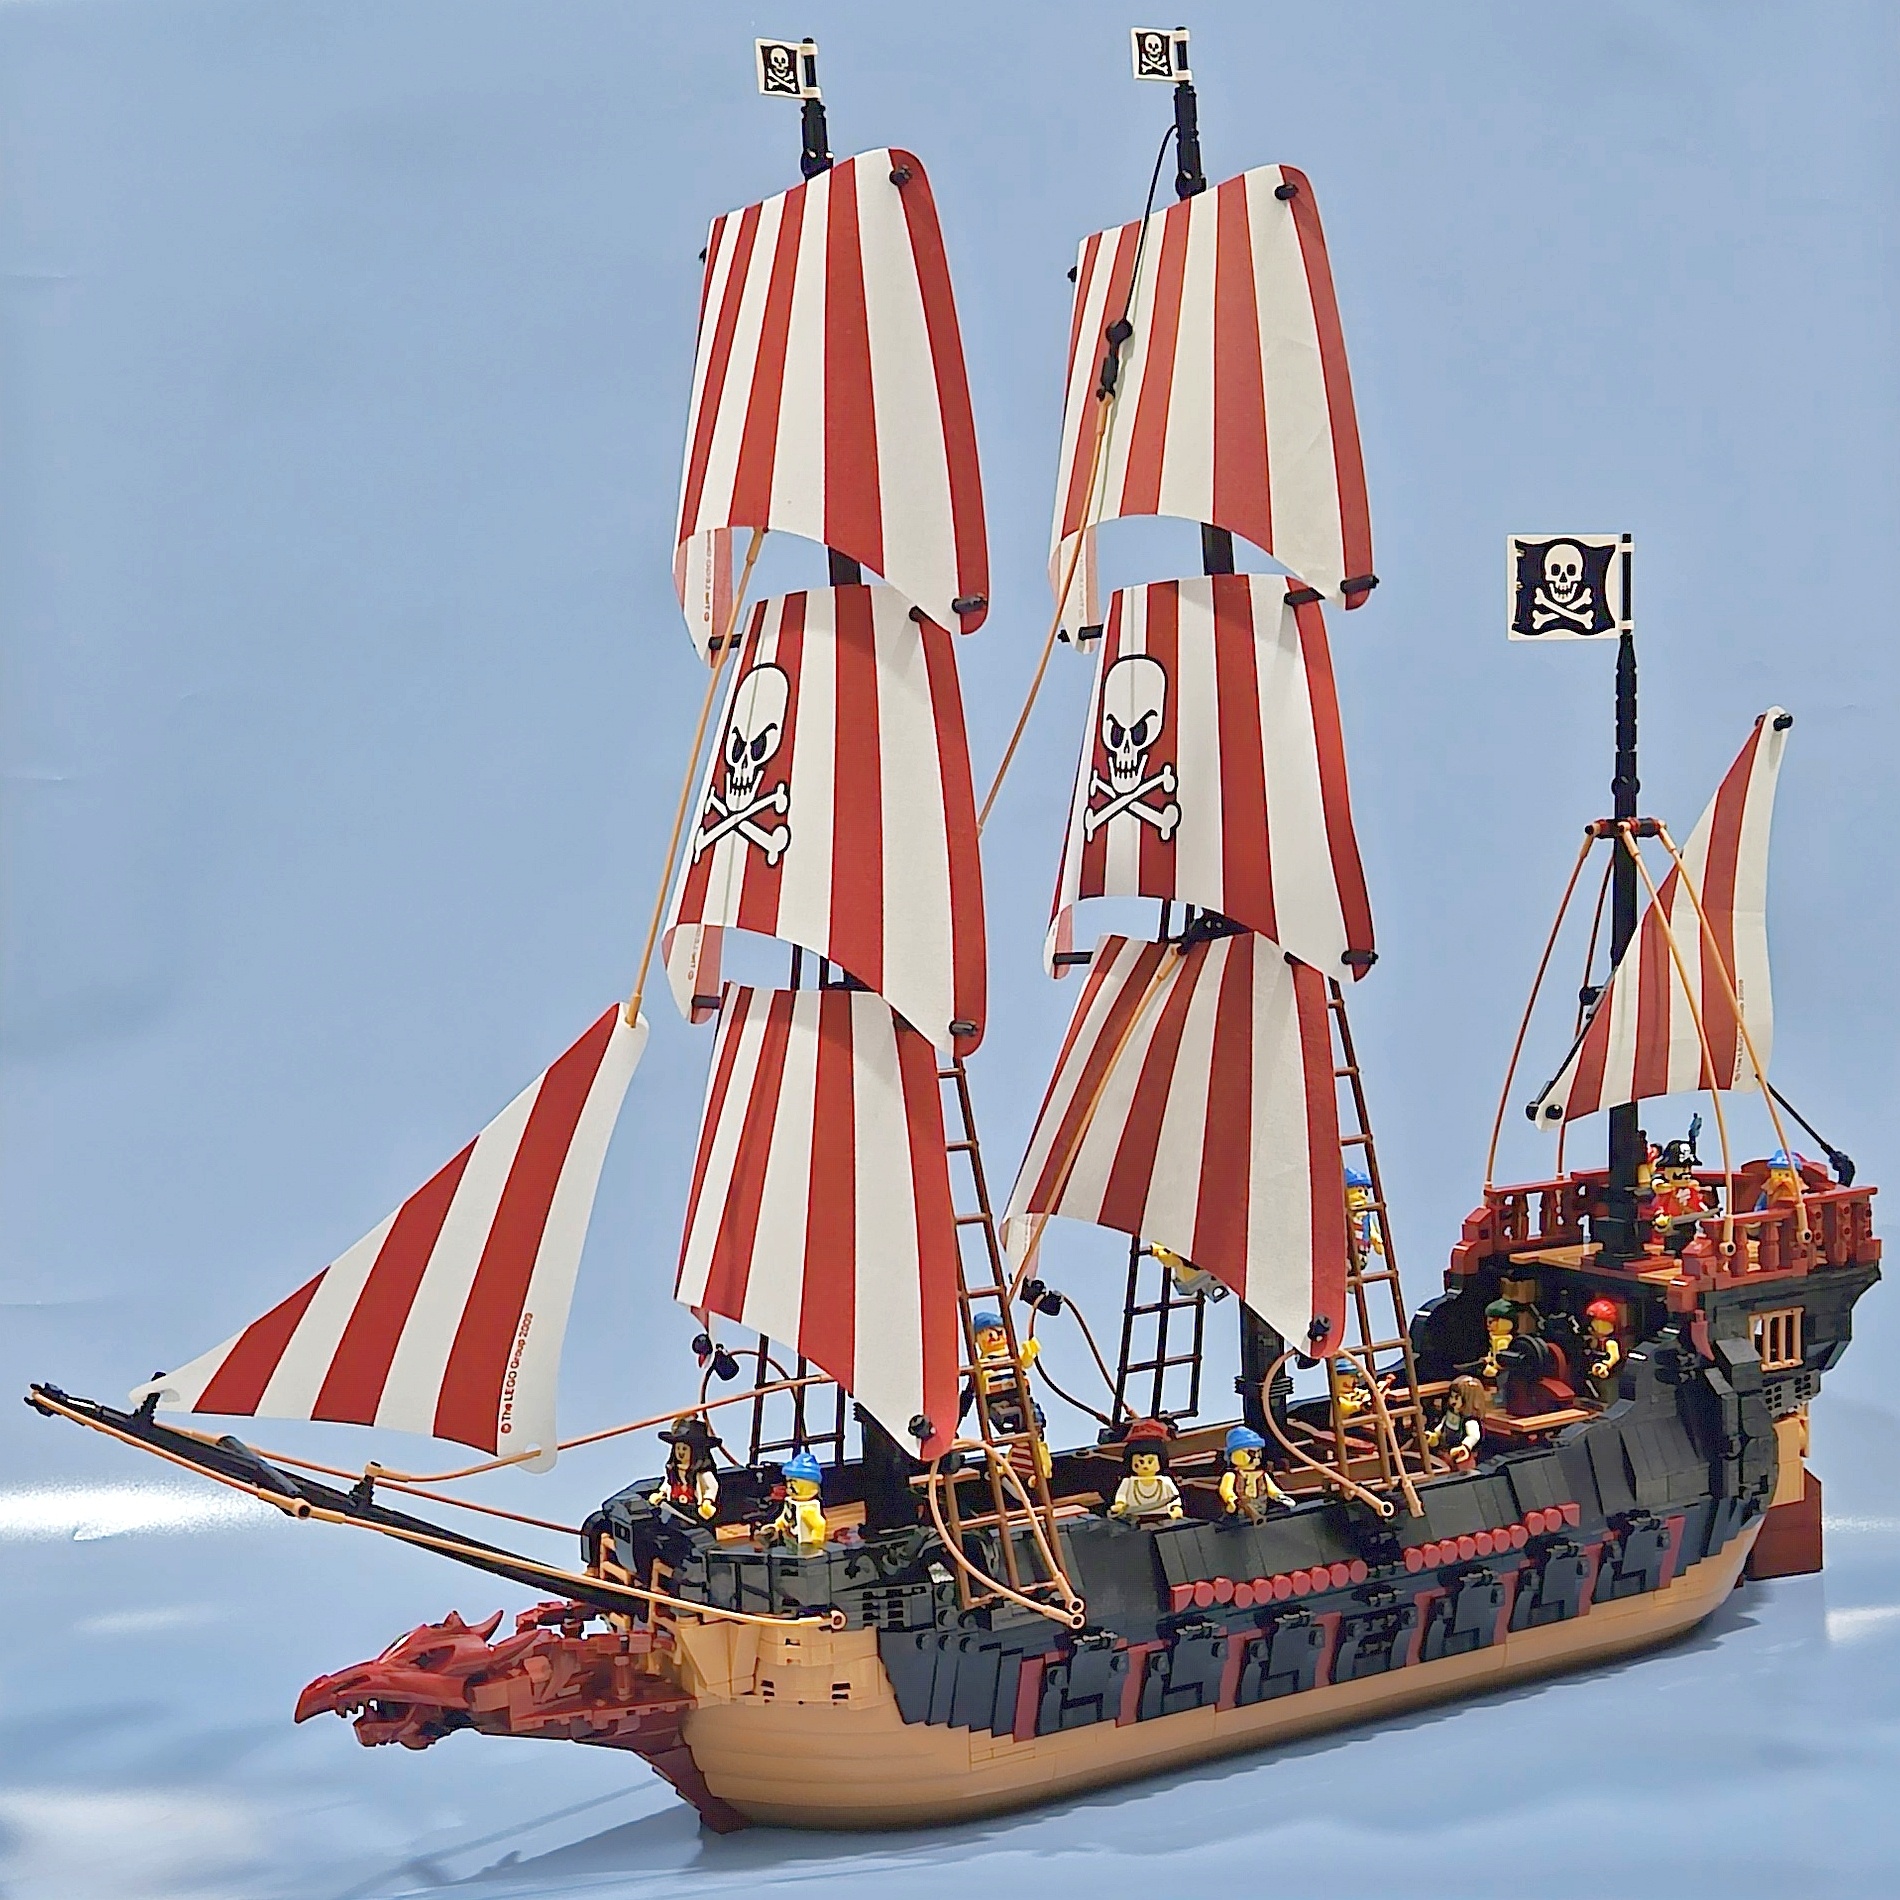 MOC] Kiss of Death, my new pirate ship! - Pirate MOCs - Eurobricks Forums